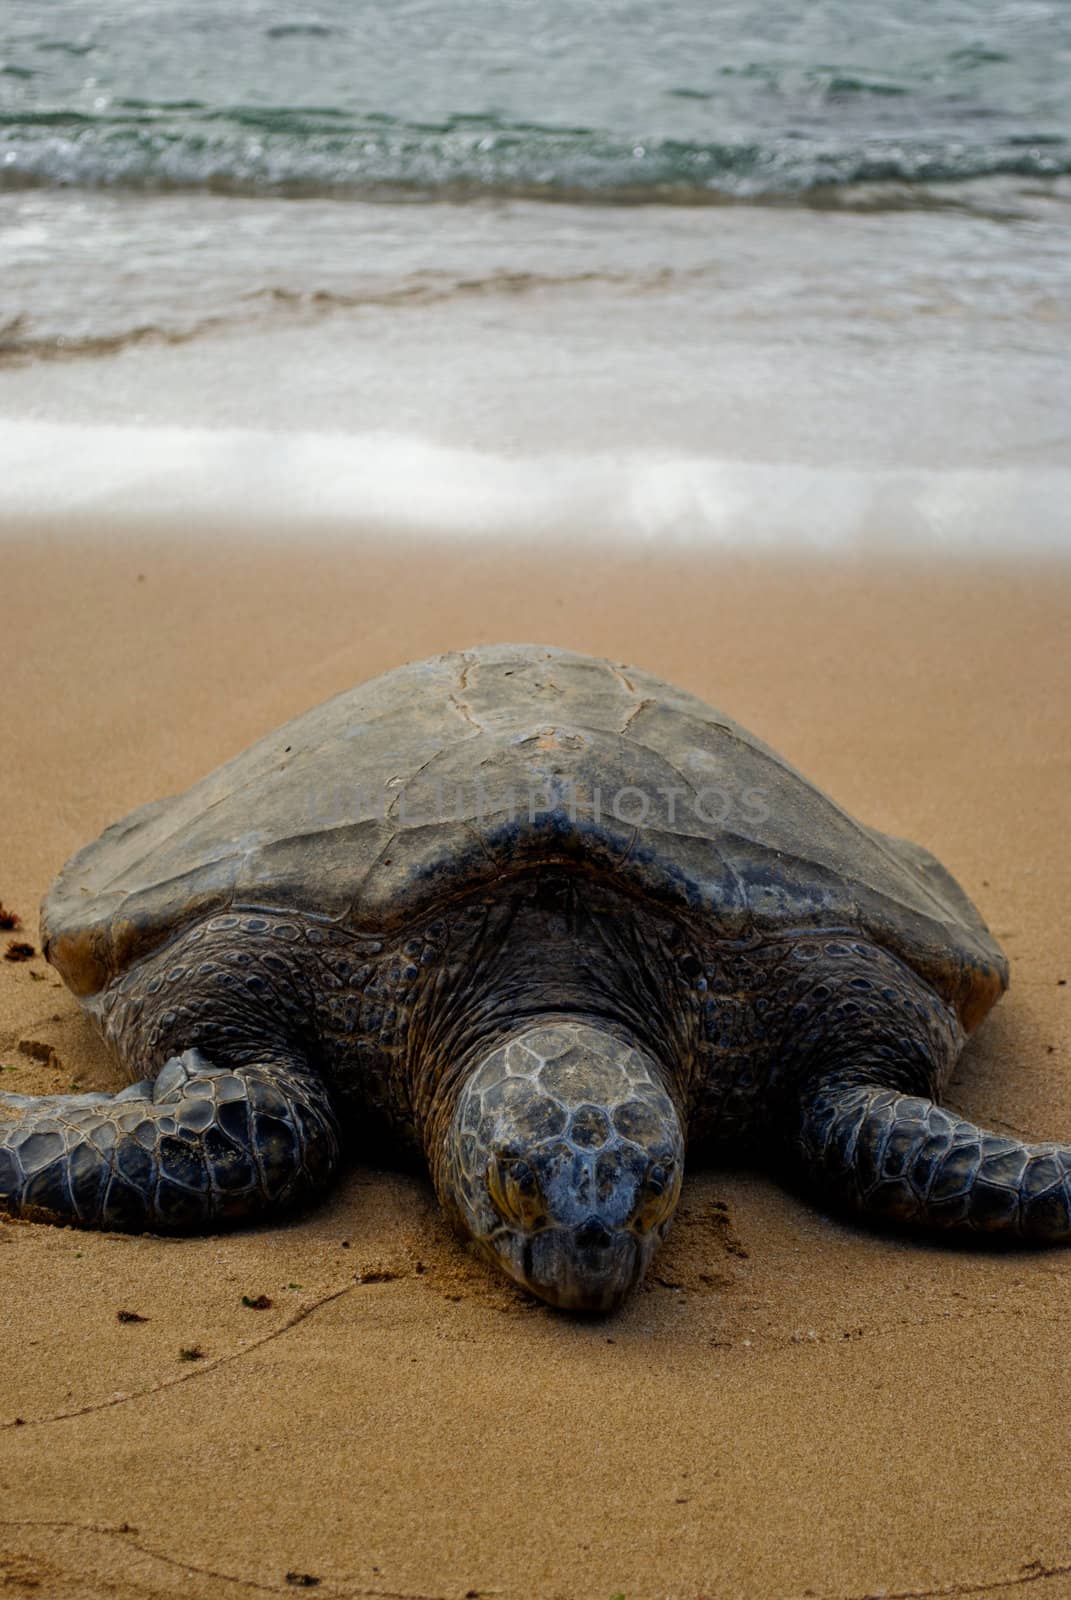 Endangered sea turtle soaking up the sun on a beach on Oahu, Hawaii.